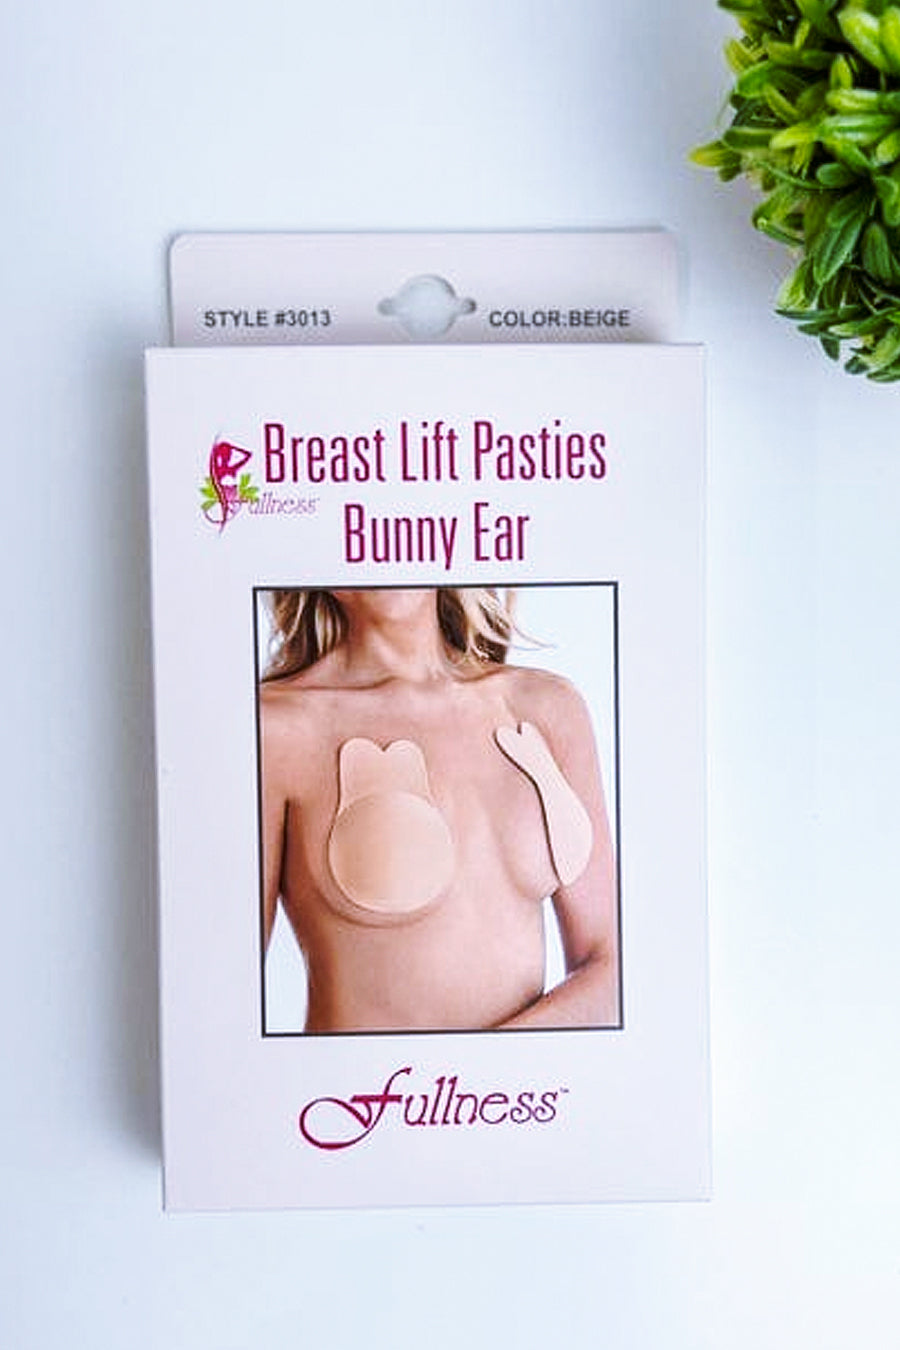 Breast Lift Pasties Bunny Ear Regular Size